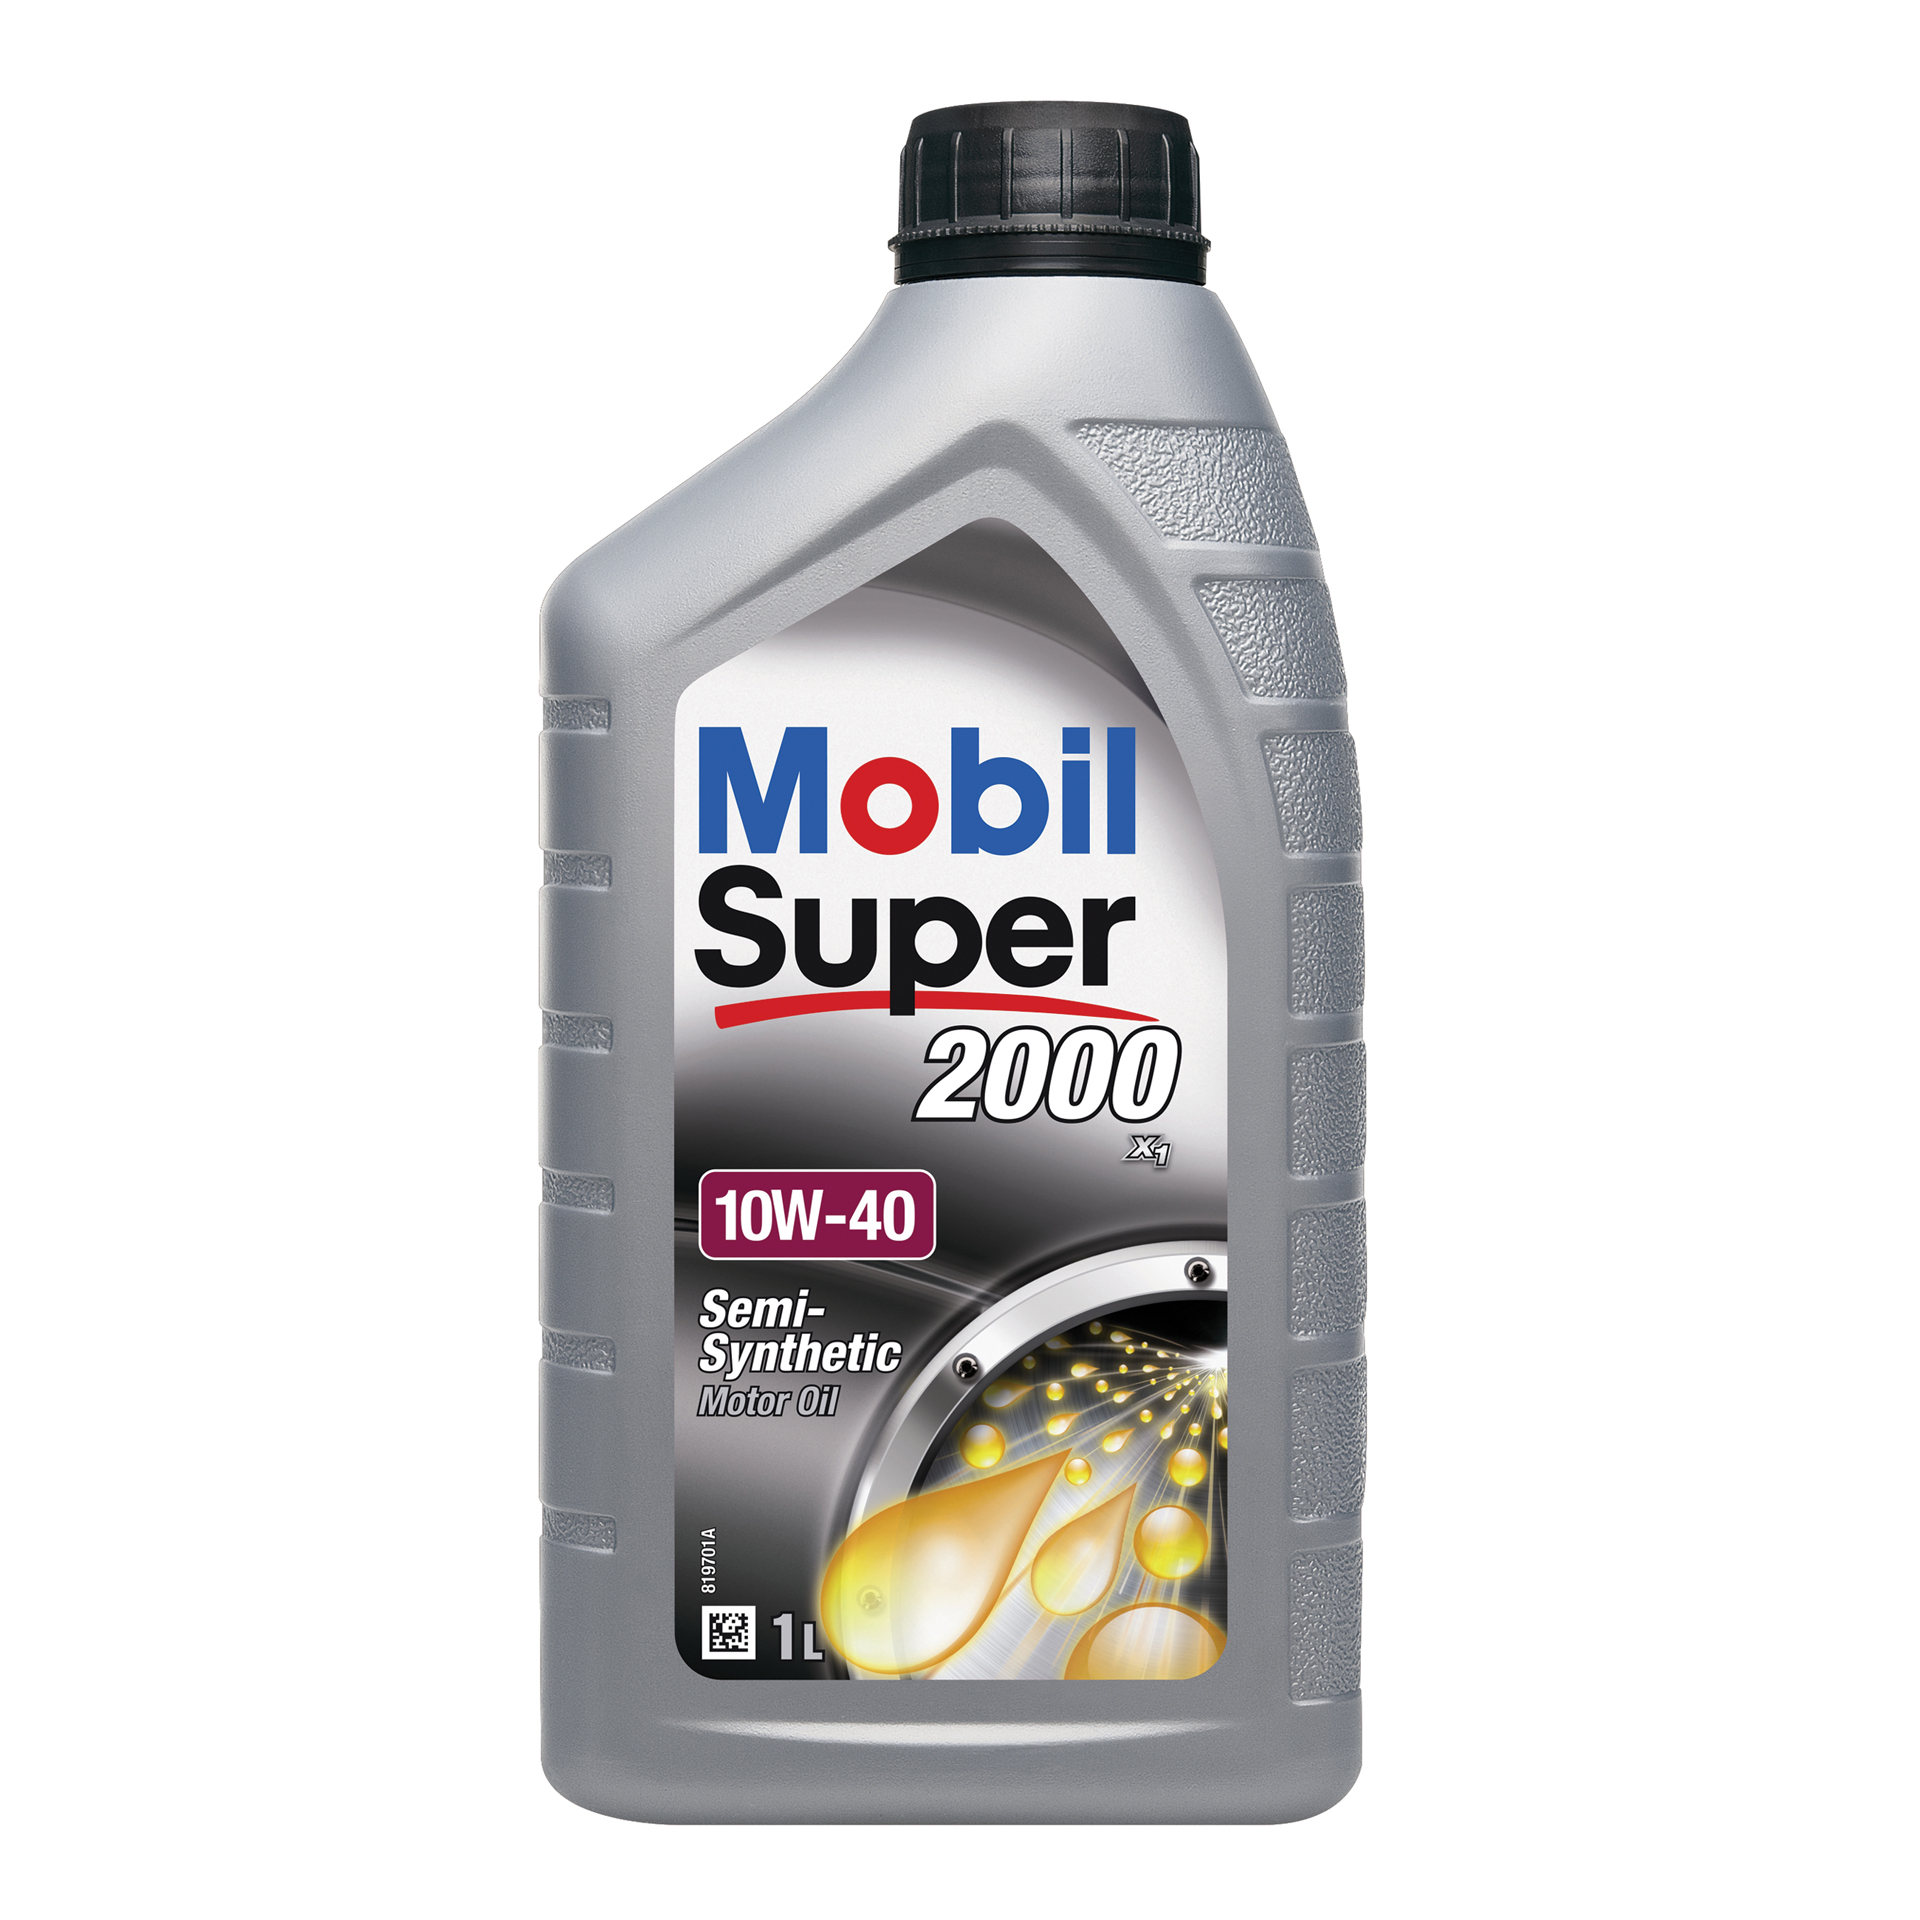 Mobil Mobil Motorolie Super 2000 X1 10W-40 GSP 1 liter 1841050